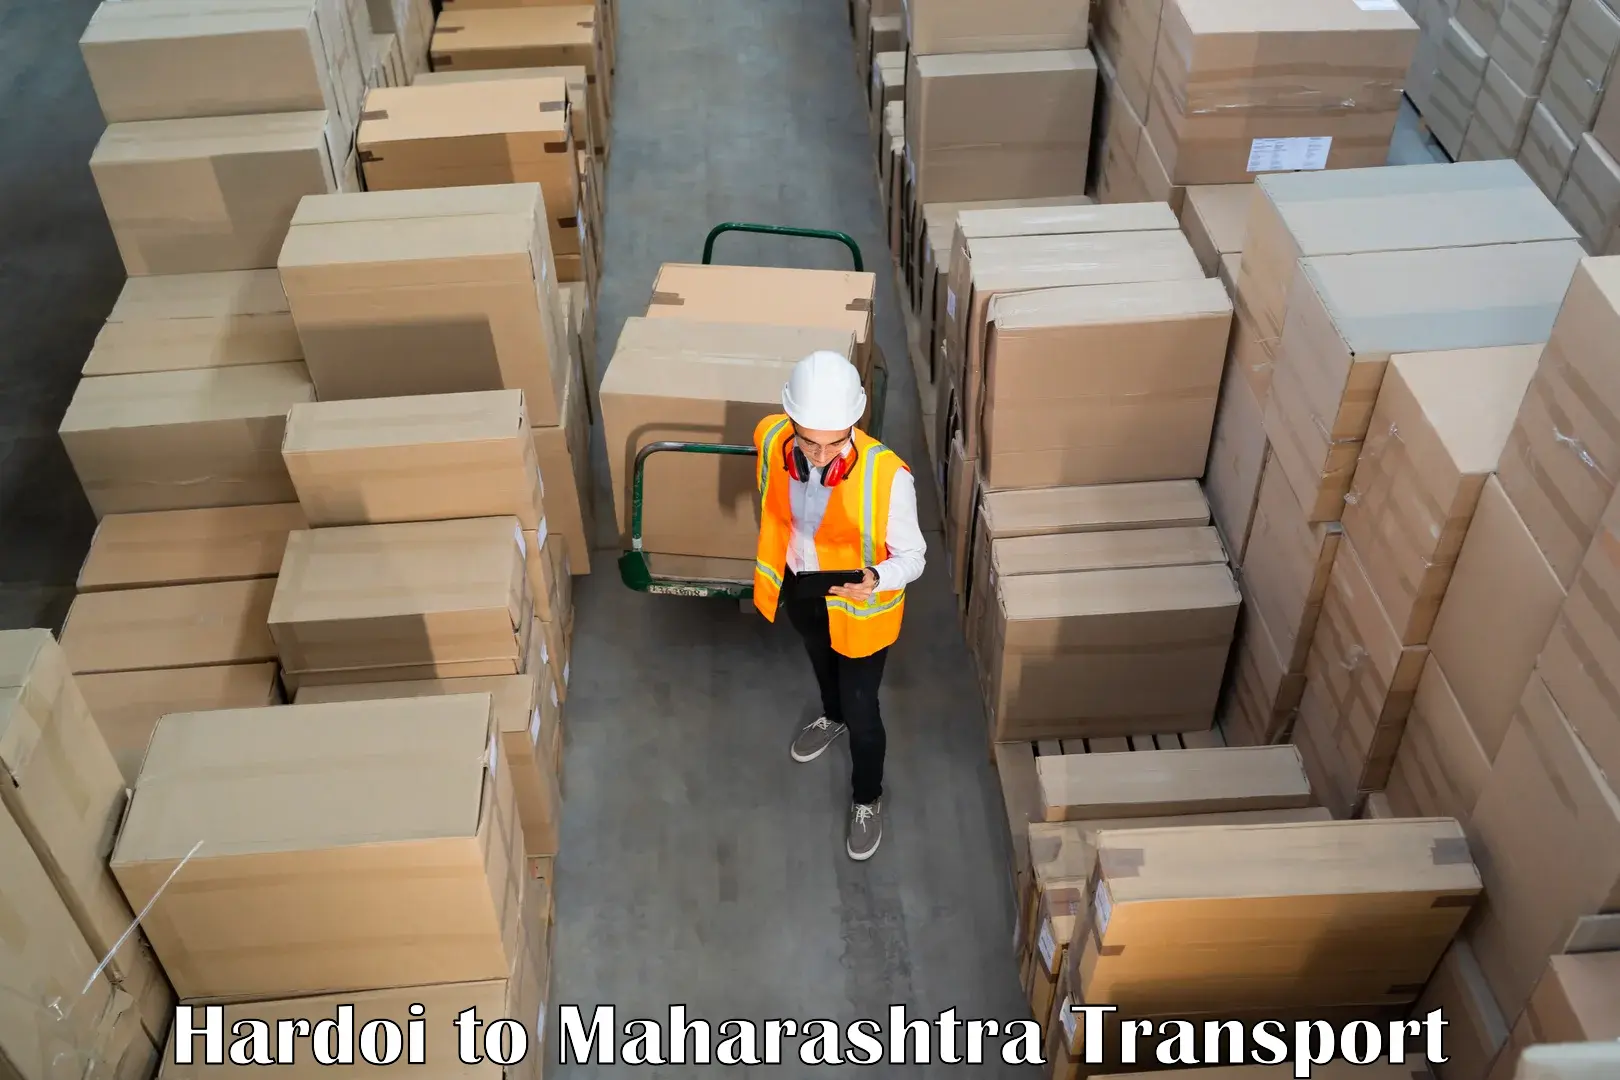 Air freight transport services Hardoi to Symbiosis International Pune